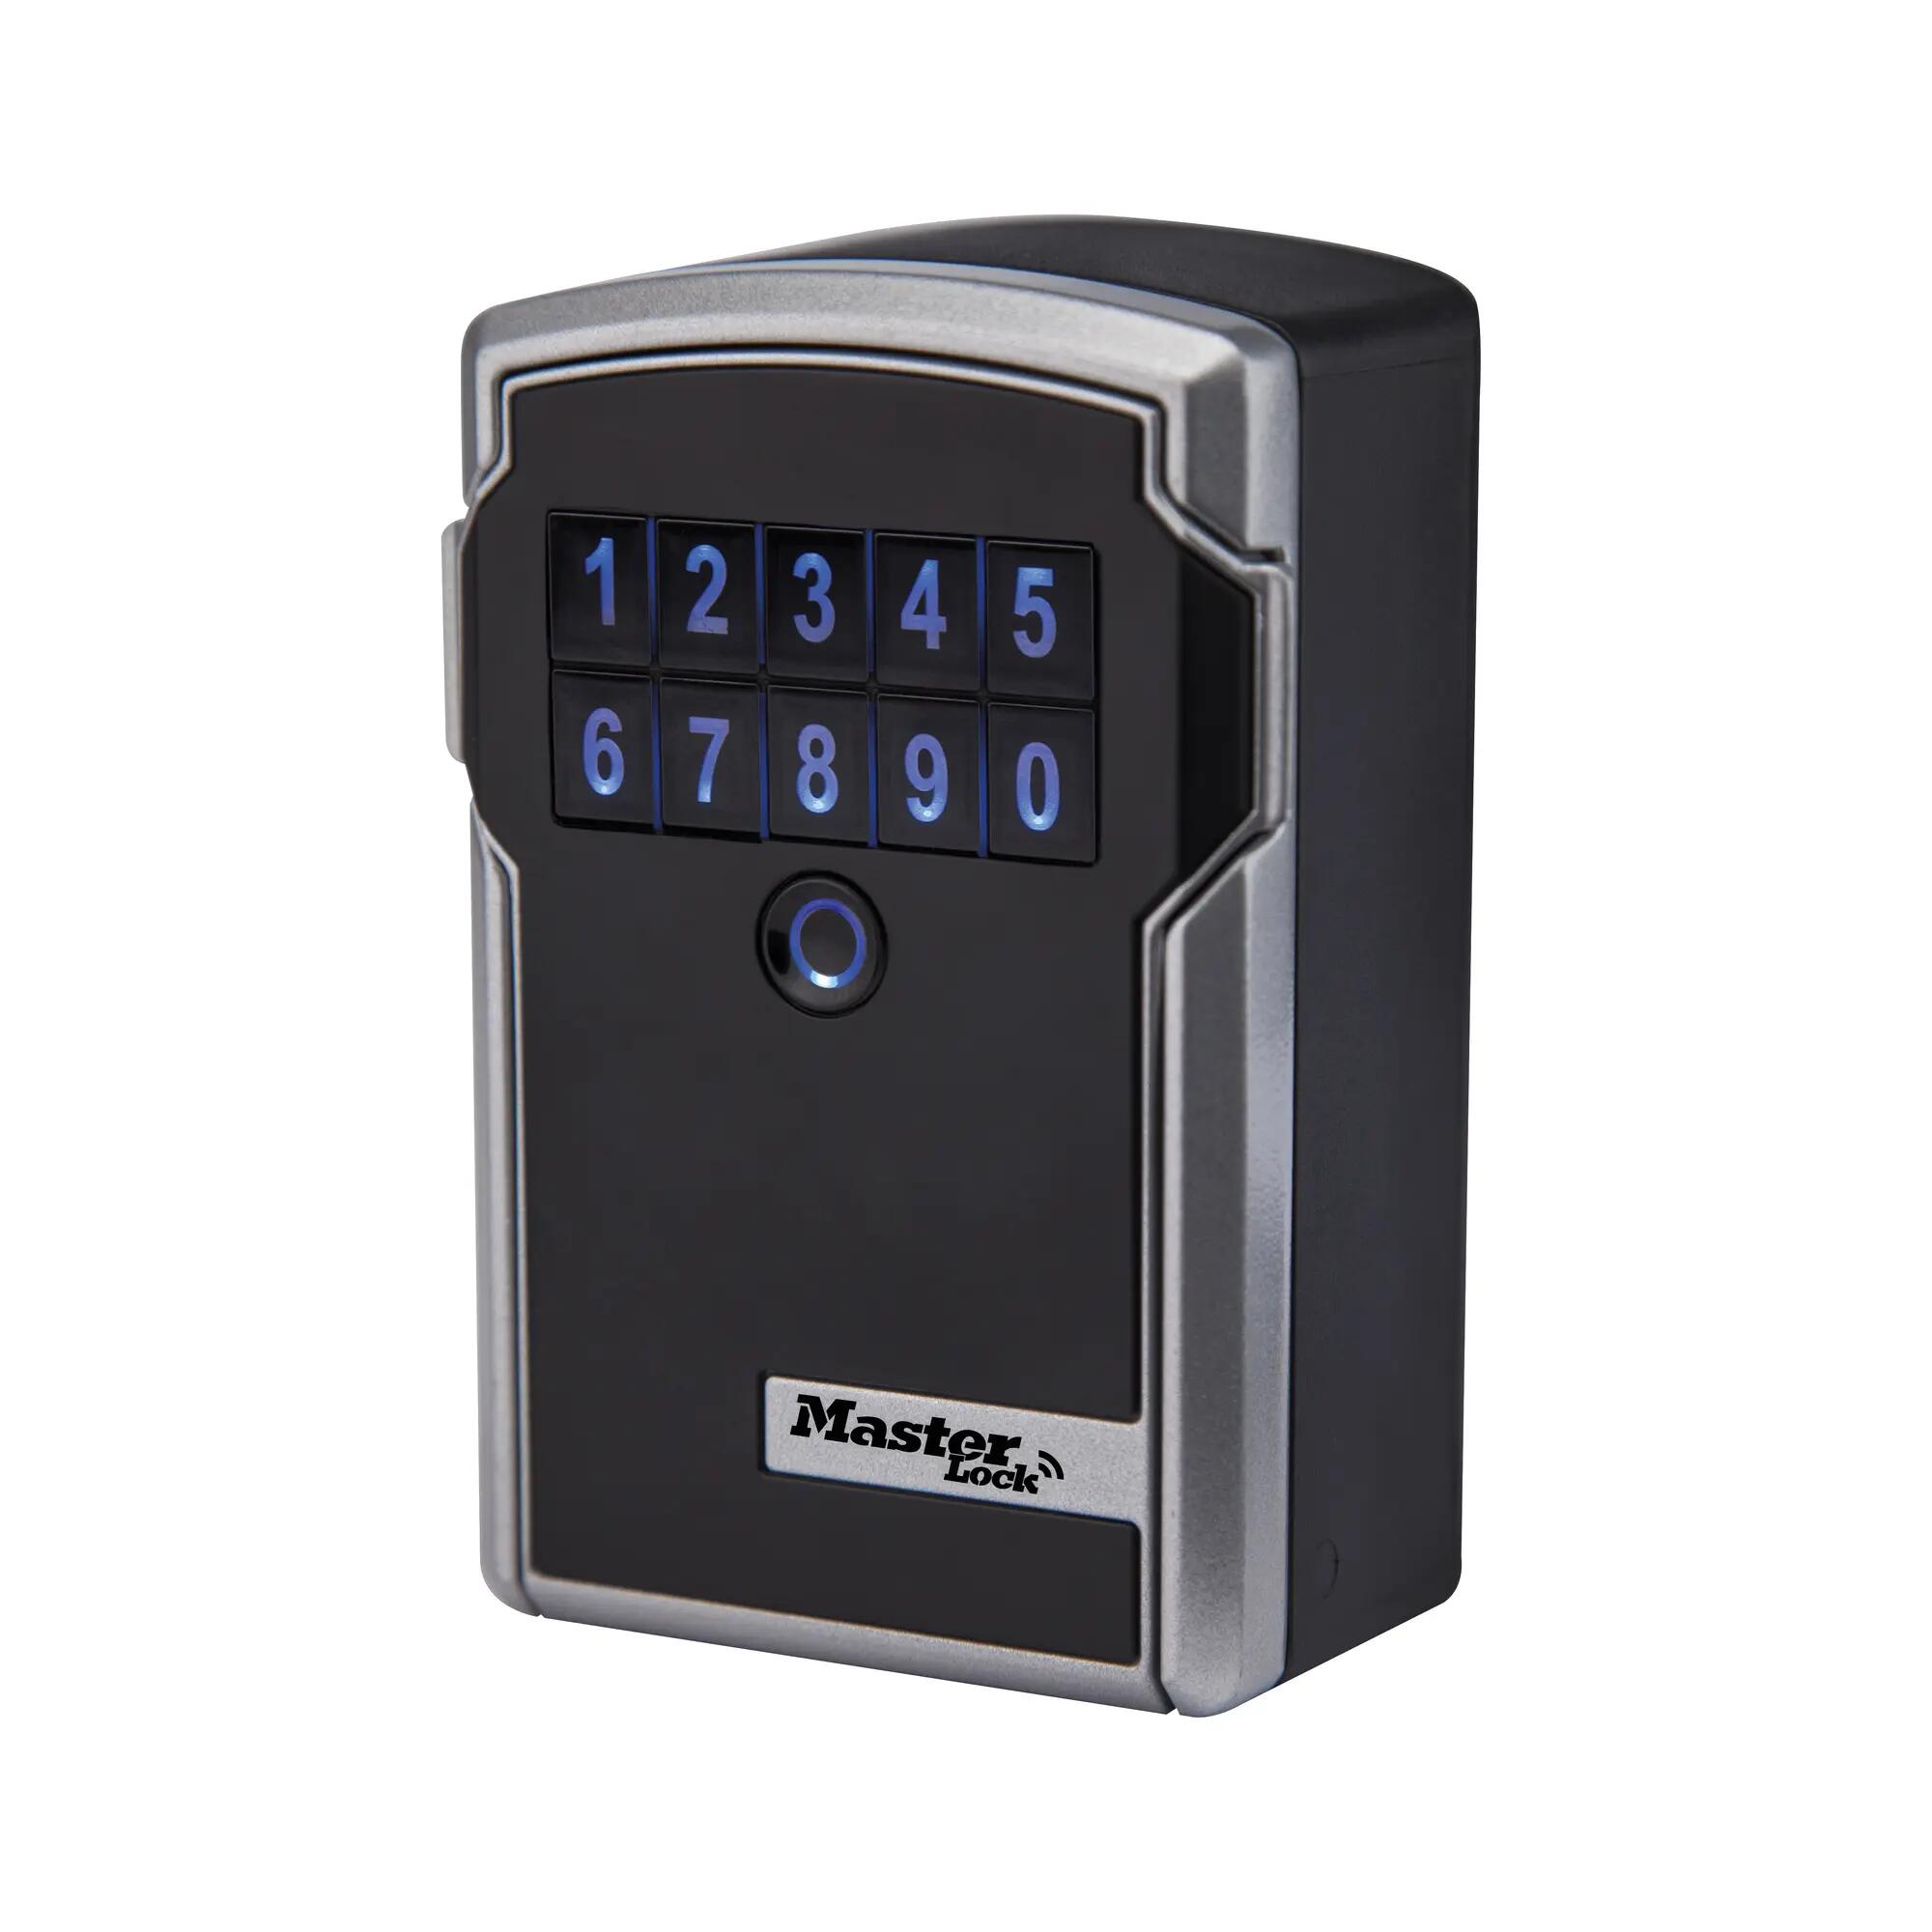 Cassetta di sicurezza per chiavi MASTER LOCK da fissare 8.3 x 12.7 x 5.9 cm - 19